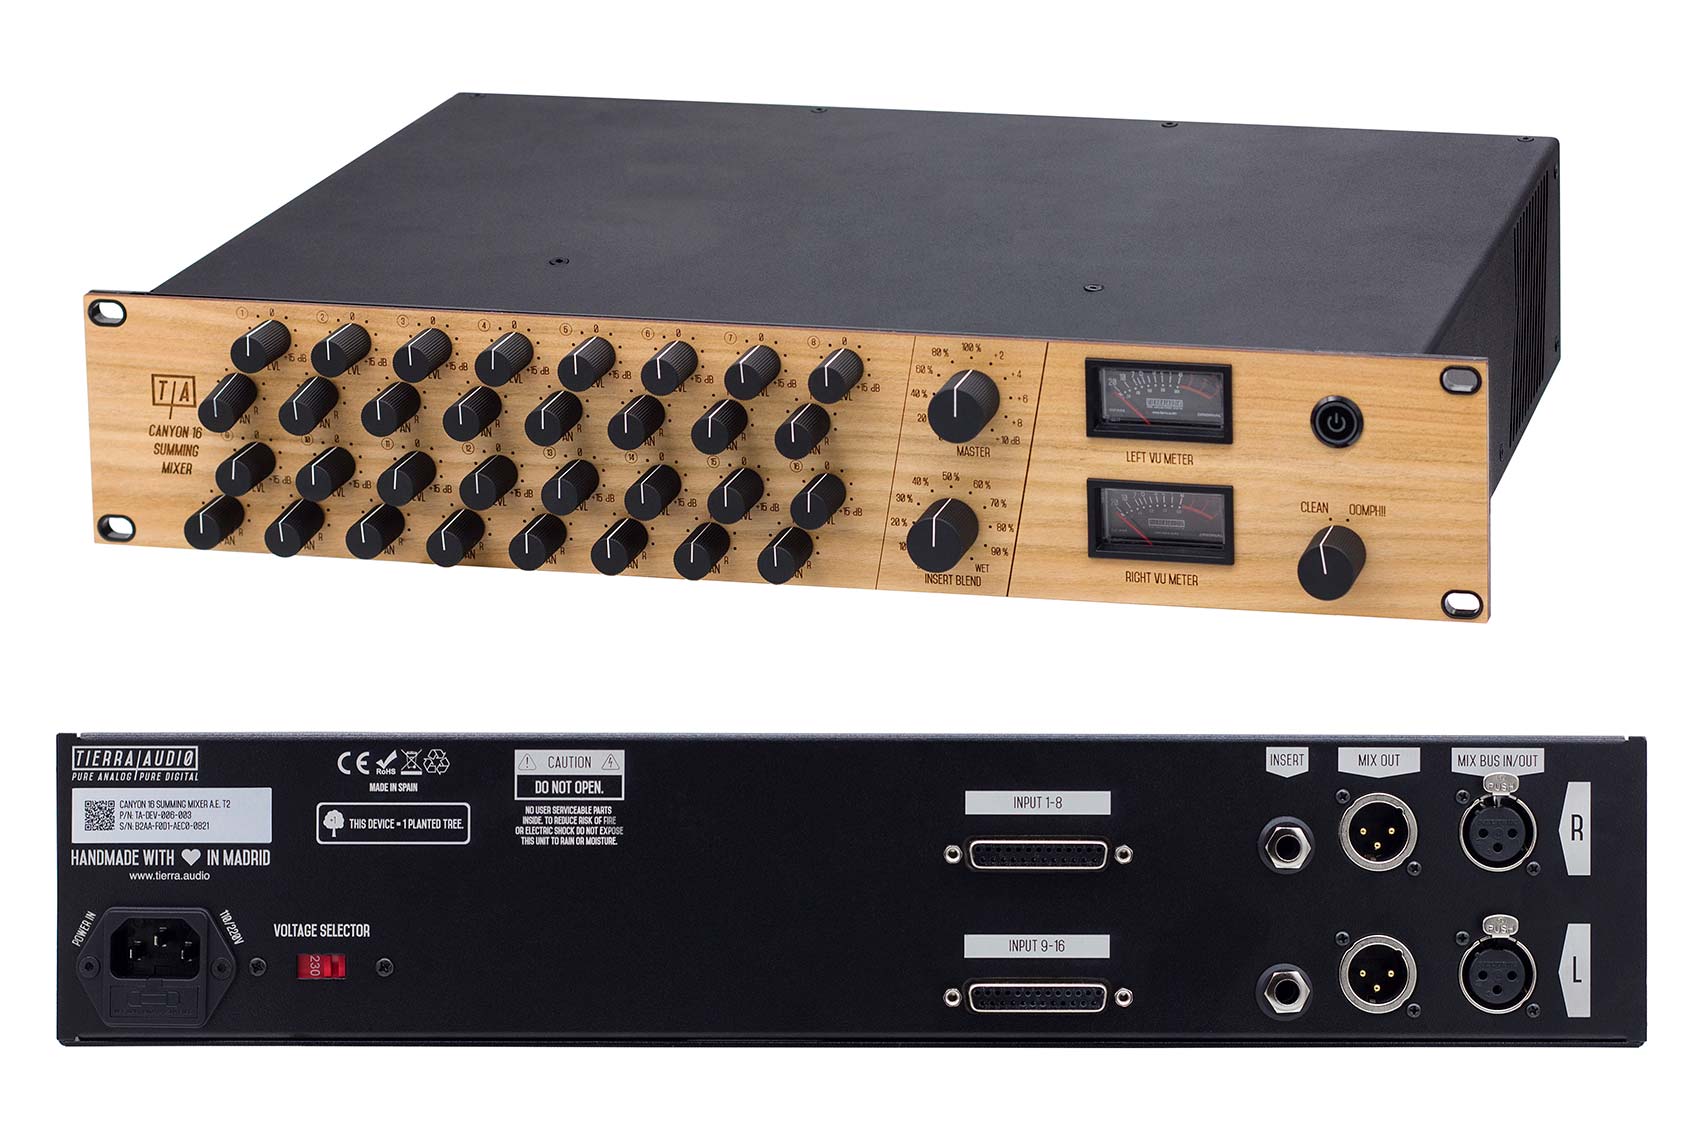 Tierra Audio analogue summing mixer and back panel